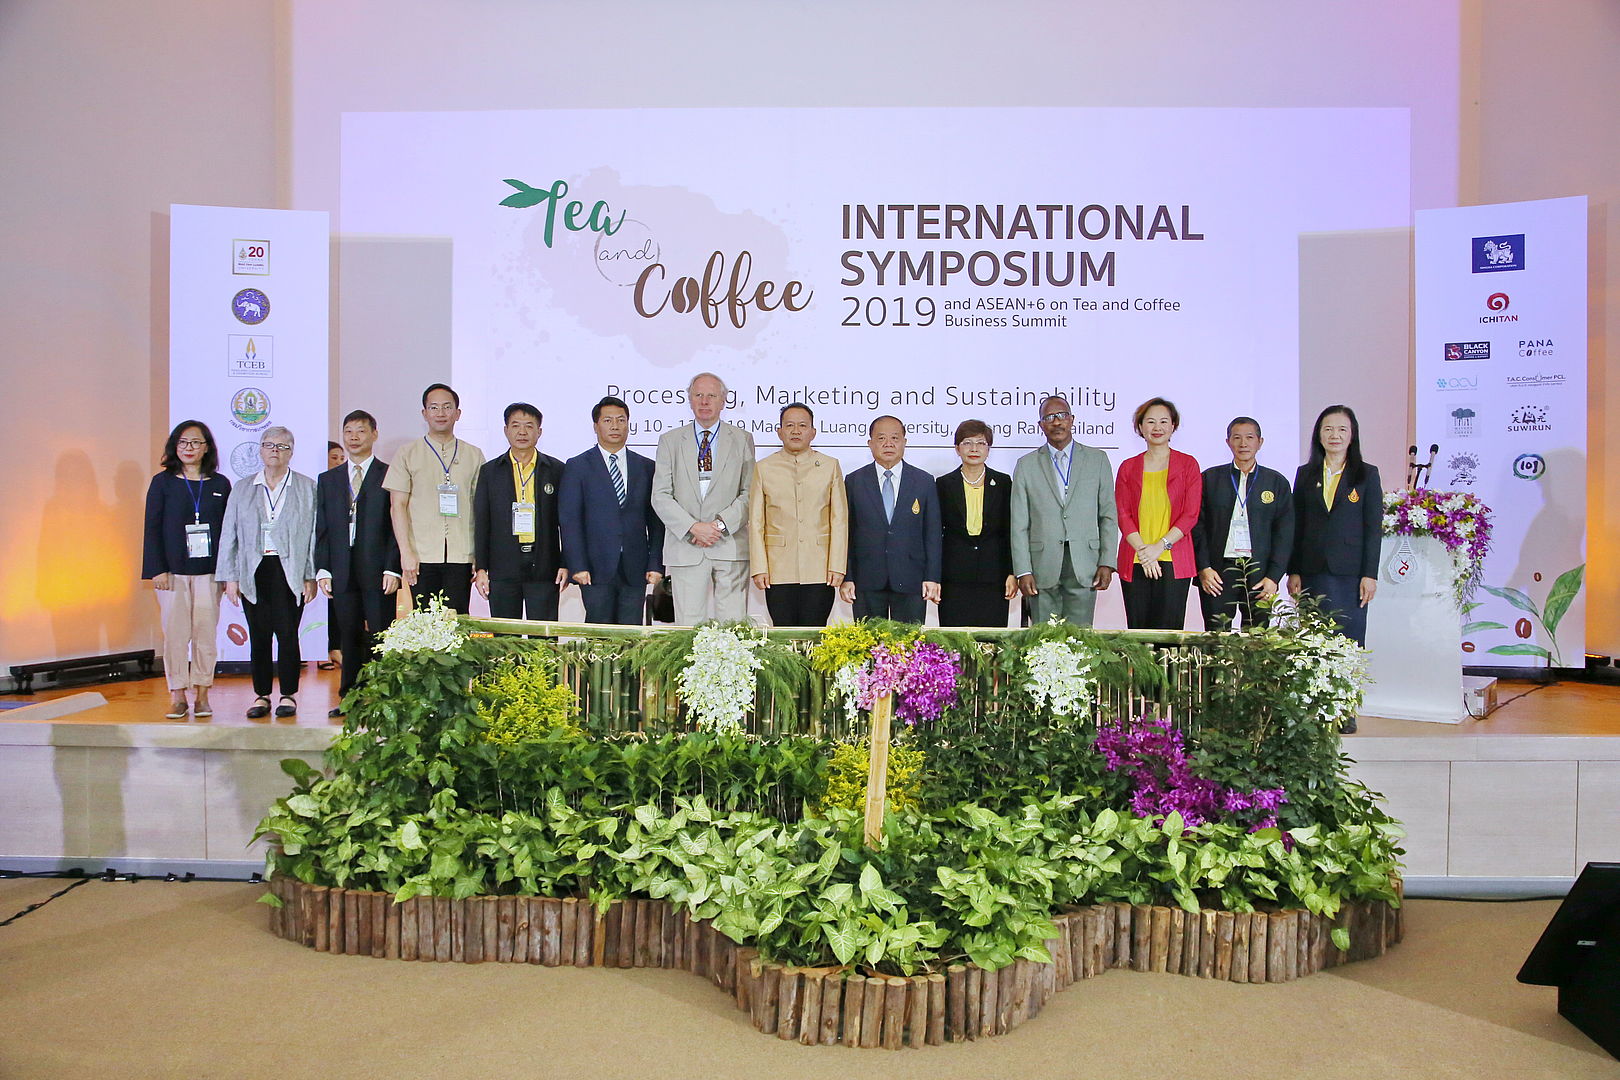 Tea and Coffee International Symposium 2019